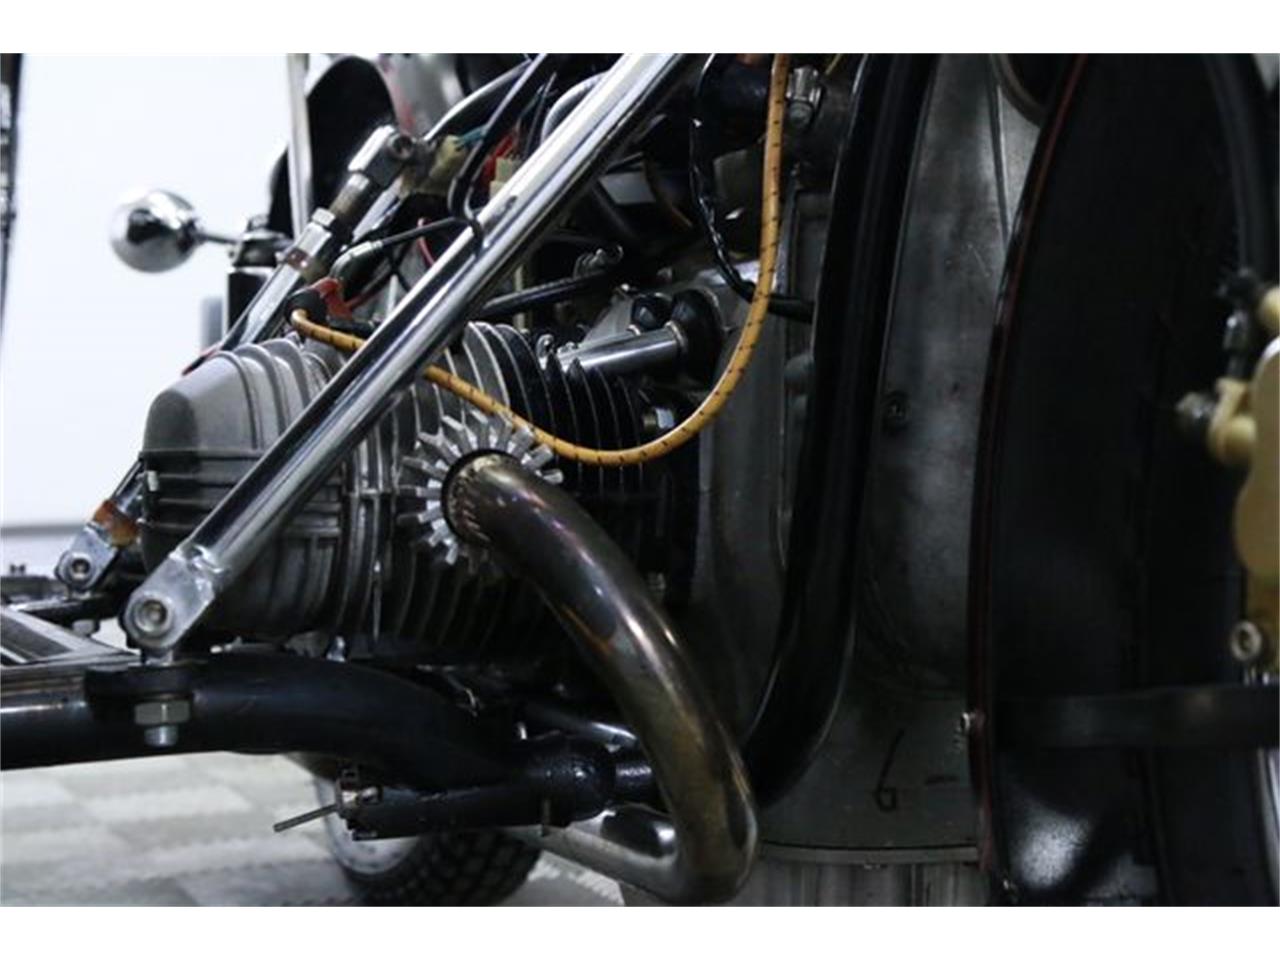 Denver Area Bmw Motorcycle Dealers - BMW Mechanic / Technician - Motorcycle Industry Jobs